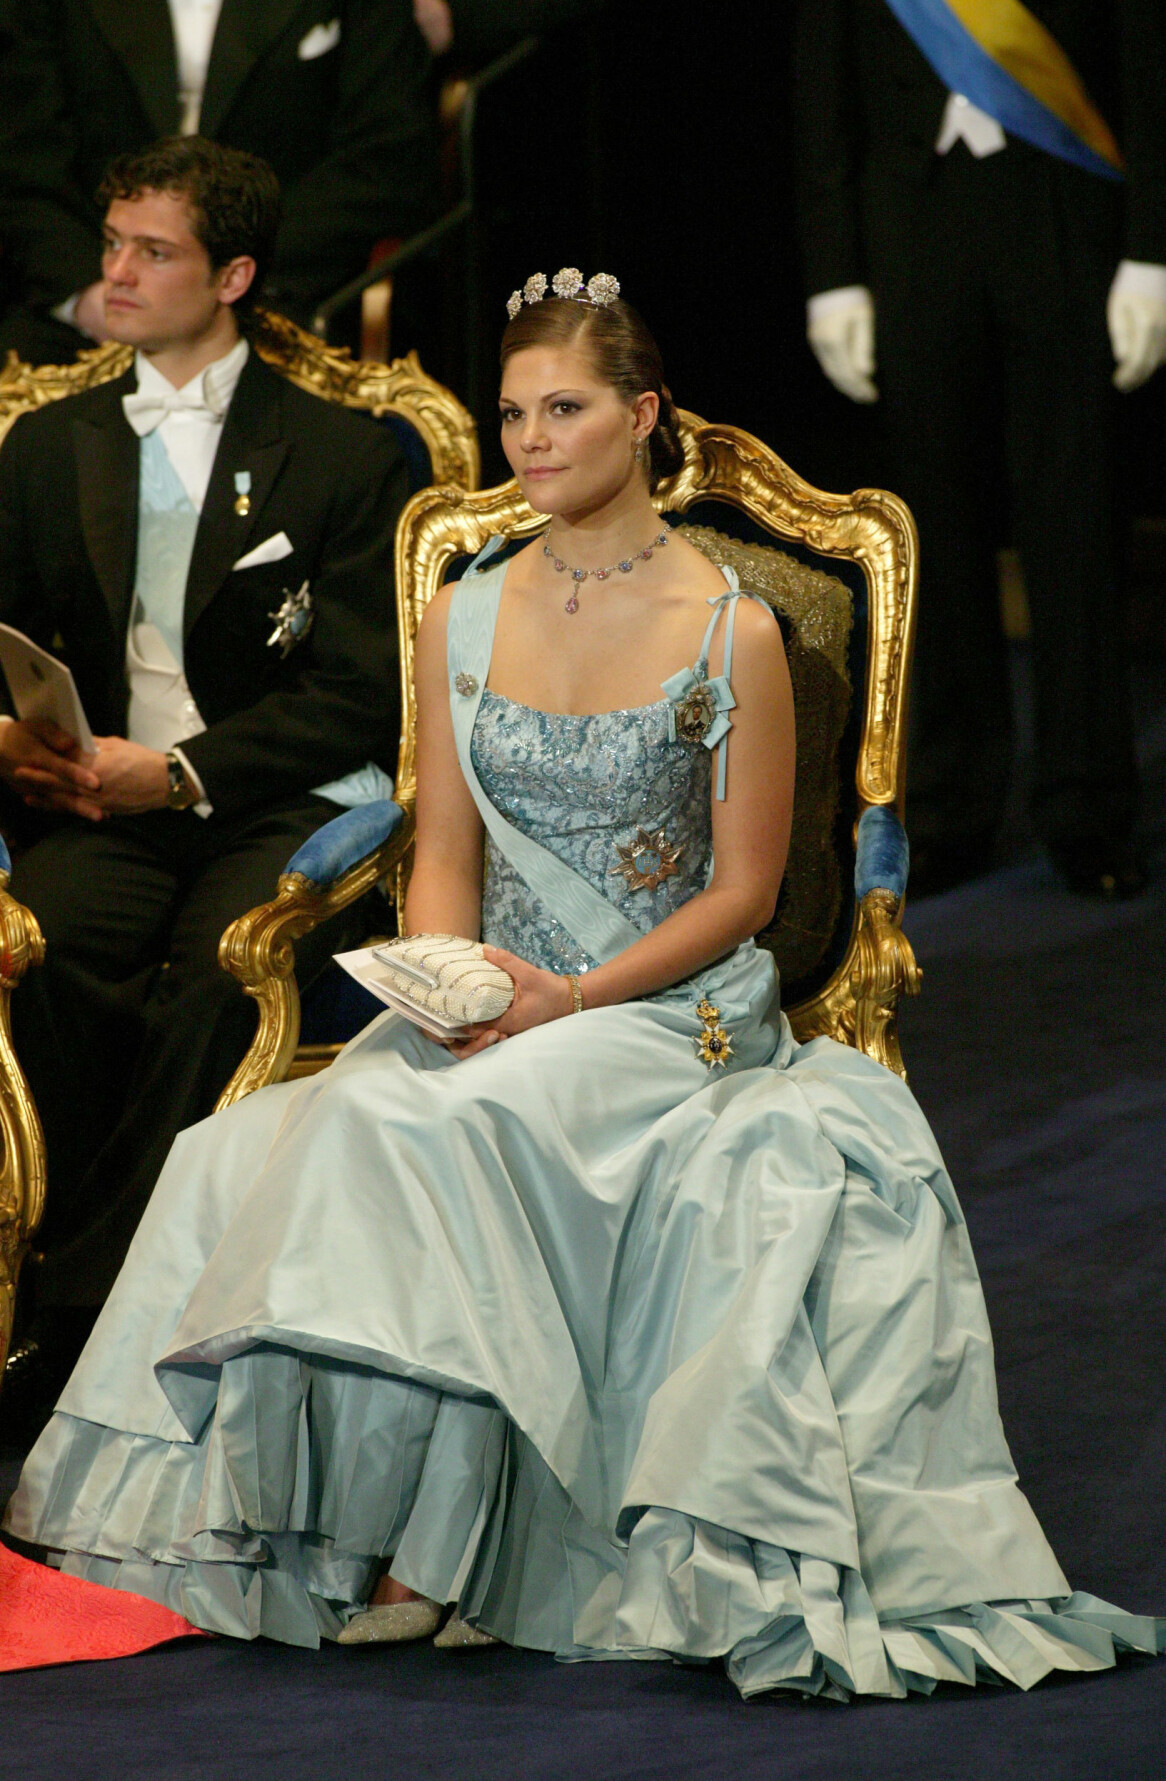 Kronprinsessan Victoria under Nobelprisets utdelning i Stockholm 2003.